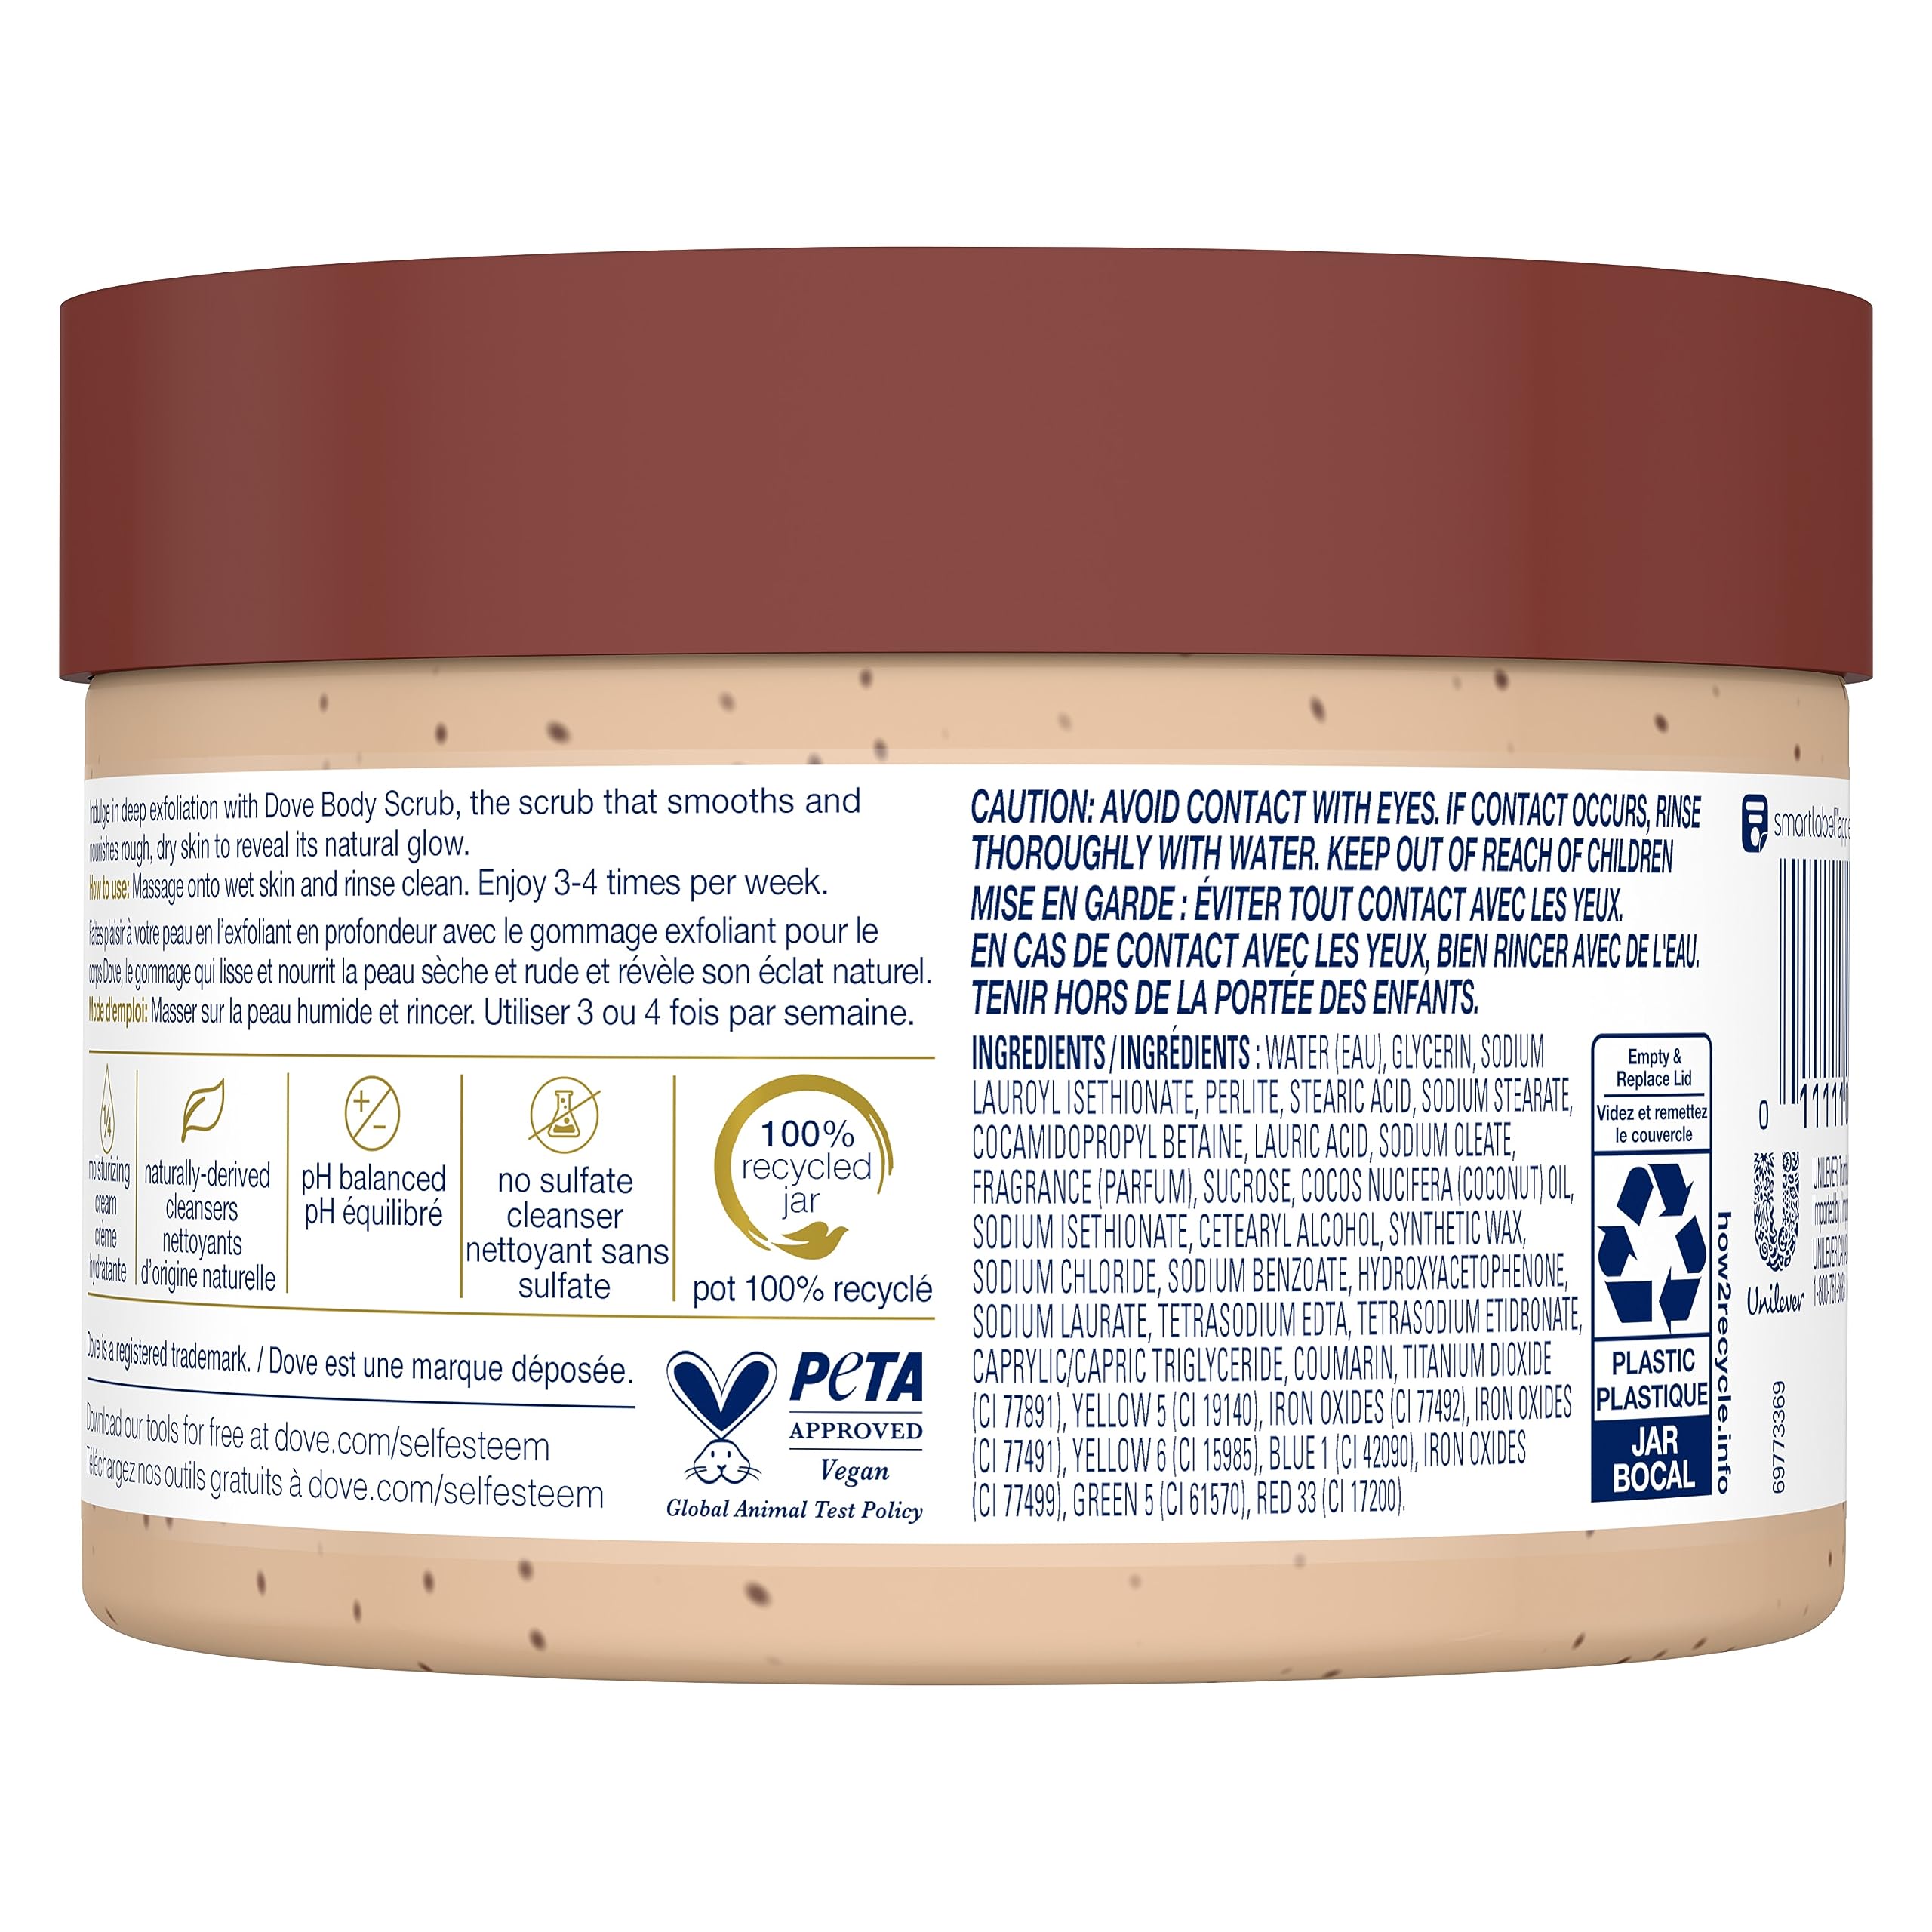 Dove Scrub Brown Sugar & Coconut Butter For Silky Smooth Skin Body Scrub Exfoliates & Restores Skin's Natural Nutrients 10.5 oz